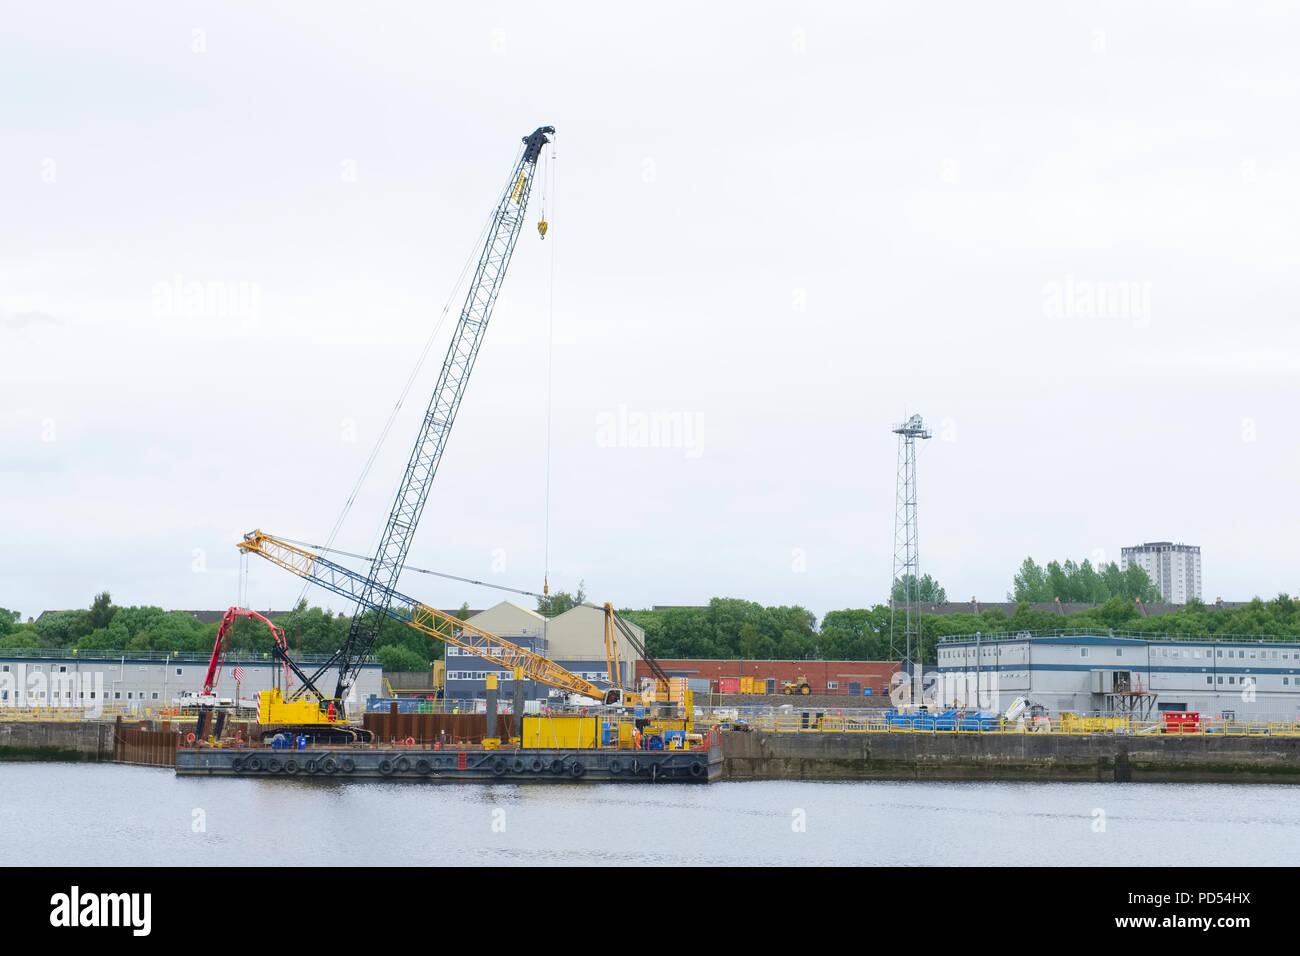 Ship Building and Crane in Port Glasgow Shipbuilding Scaffold Dock Harbor Harbour Stock Photo